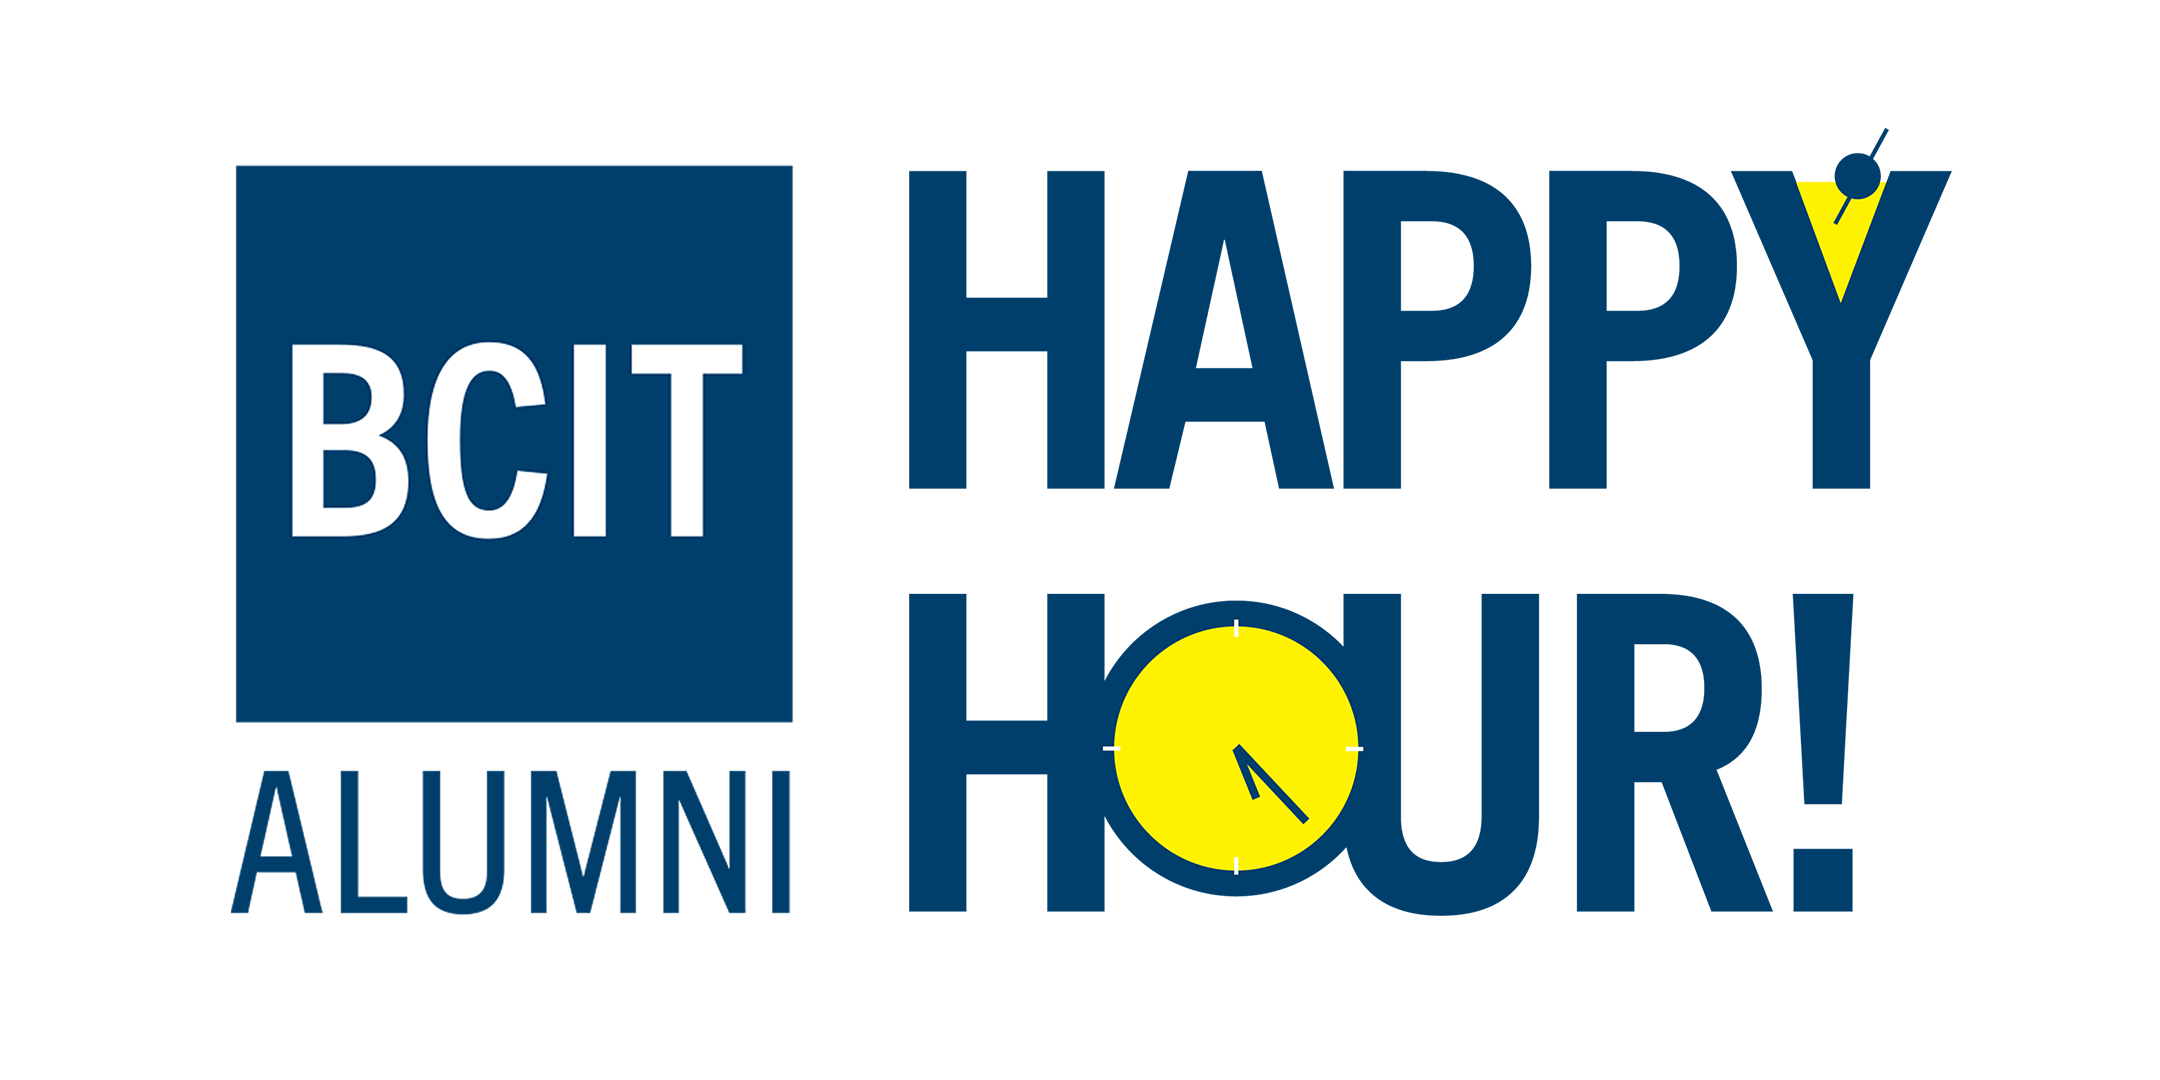 BCIT Alumni logo next text: "Happy Hour!"